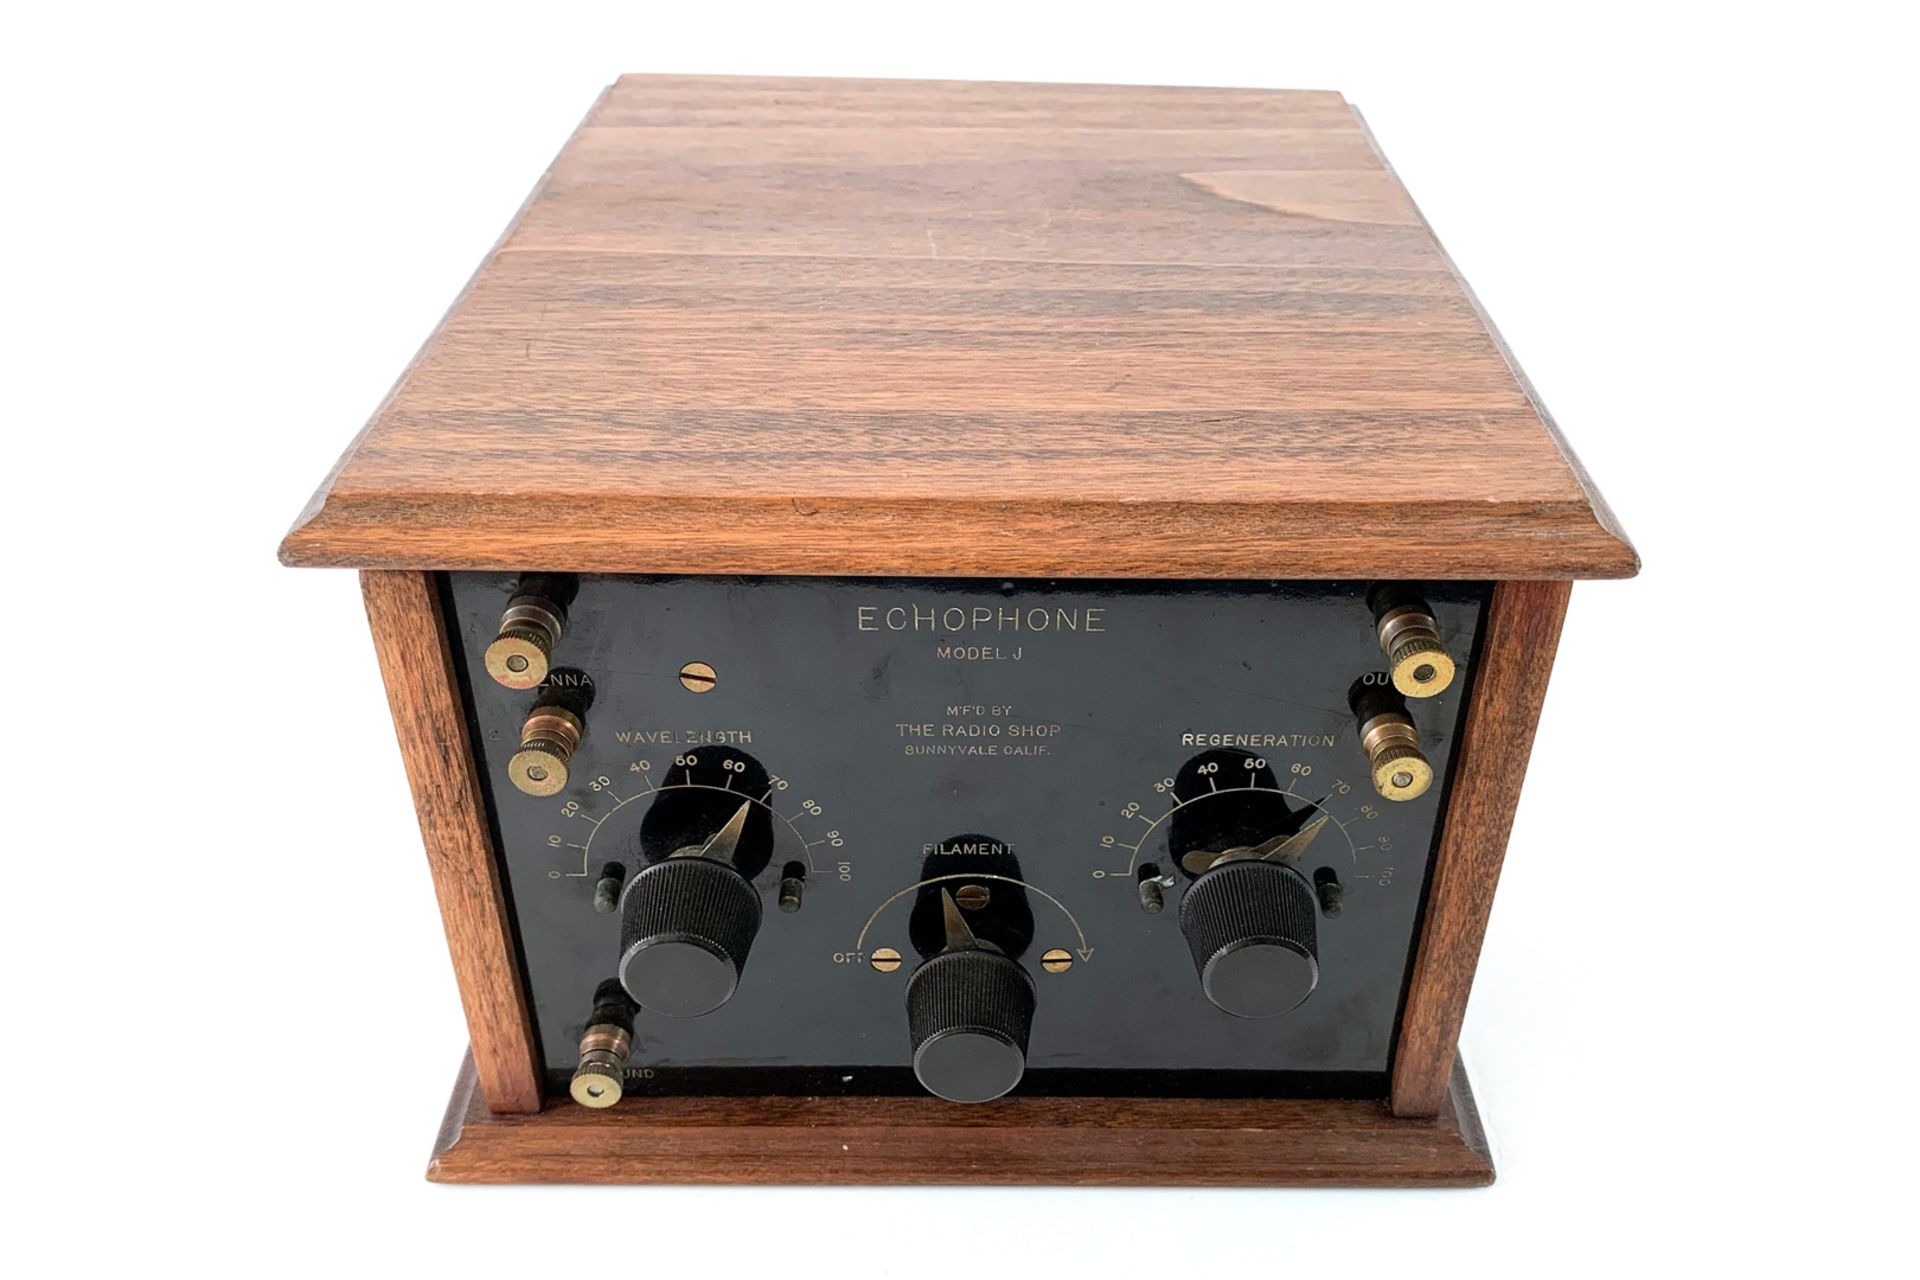 Radiogerät ”Echophone” Modell J, Serialnummer 1312, um 1923, MFD by The Radio Shop, Sunnyvale, im